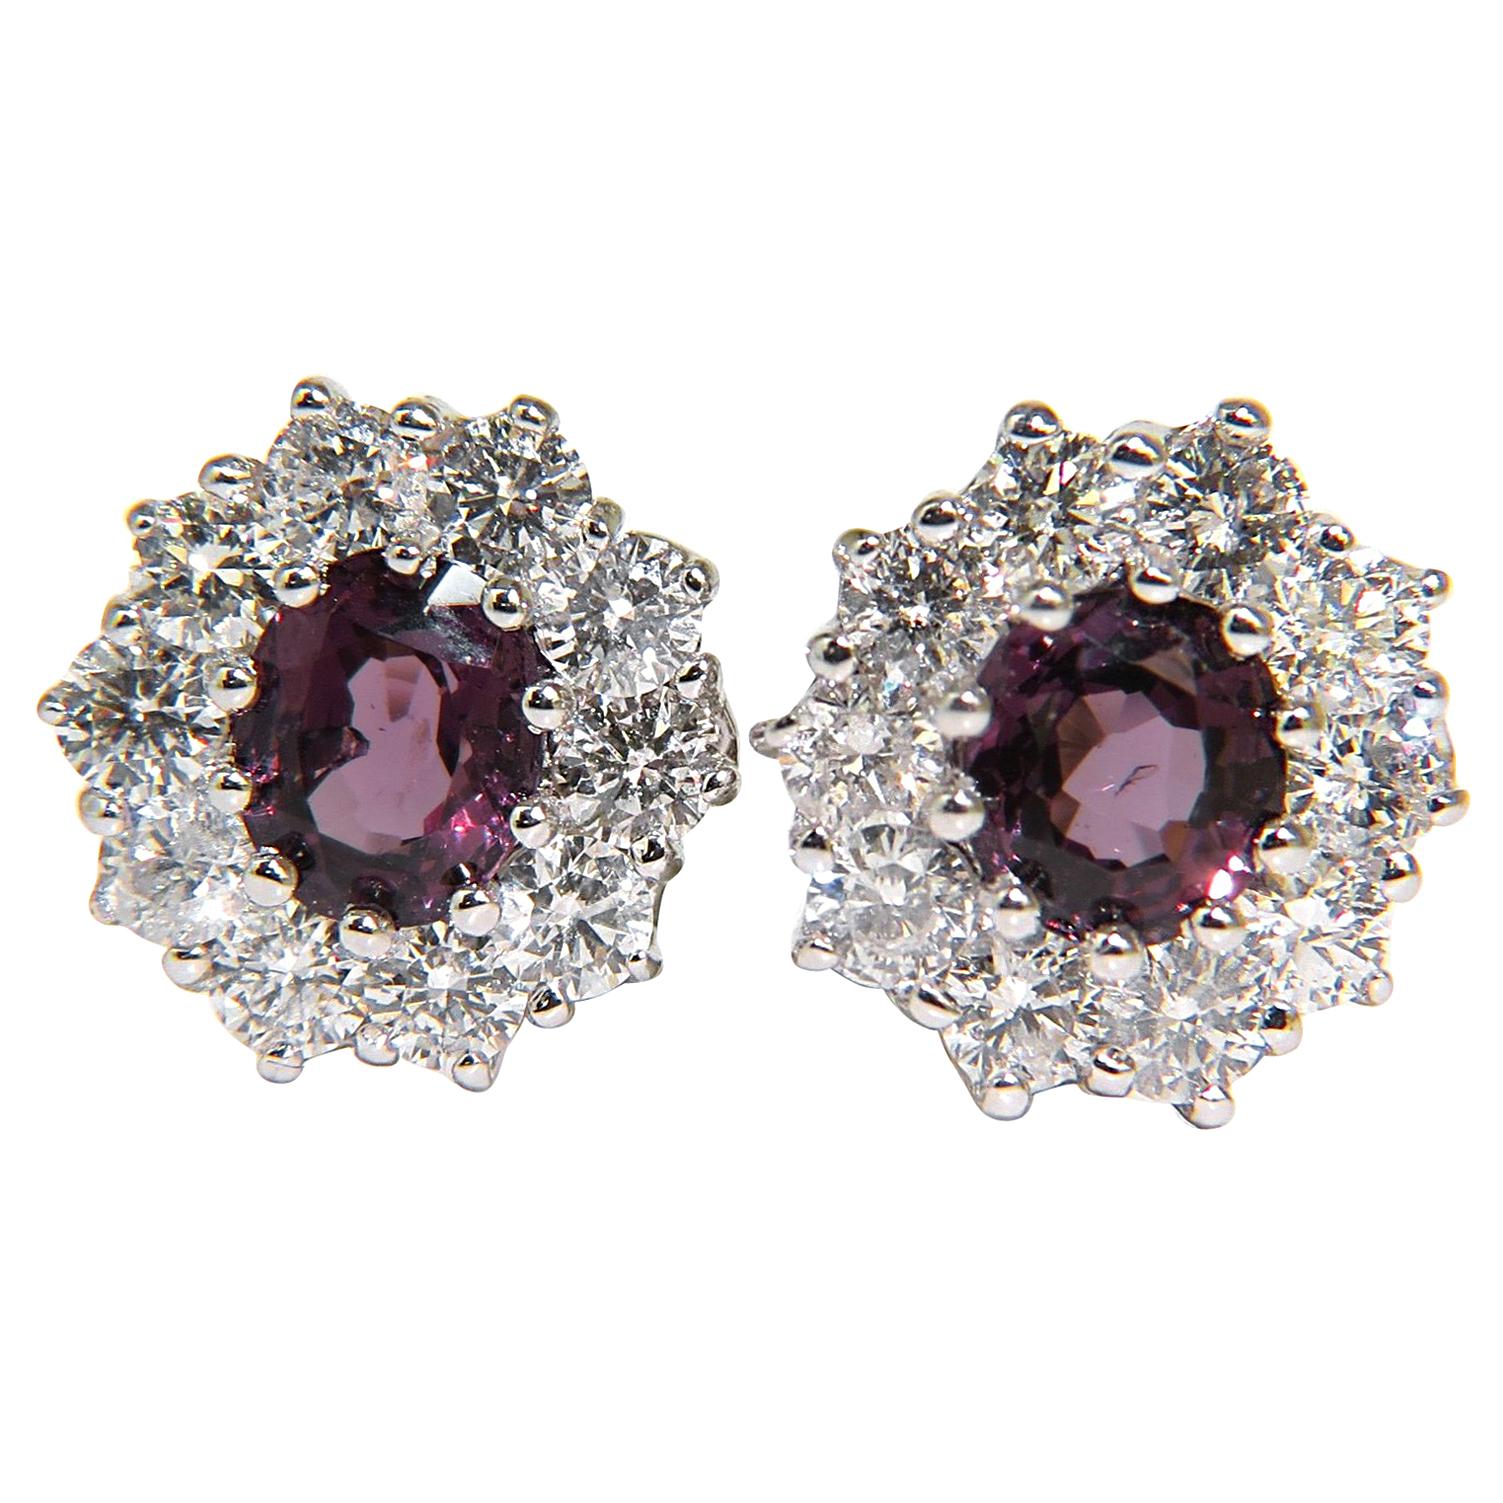 14 Karat 3.36 Carat Natural Purple Spinel Diamond Cluster Earrings and Omega